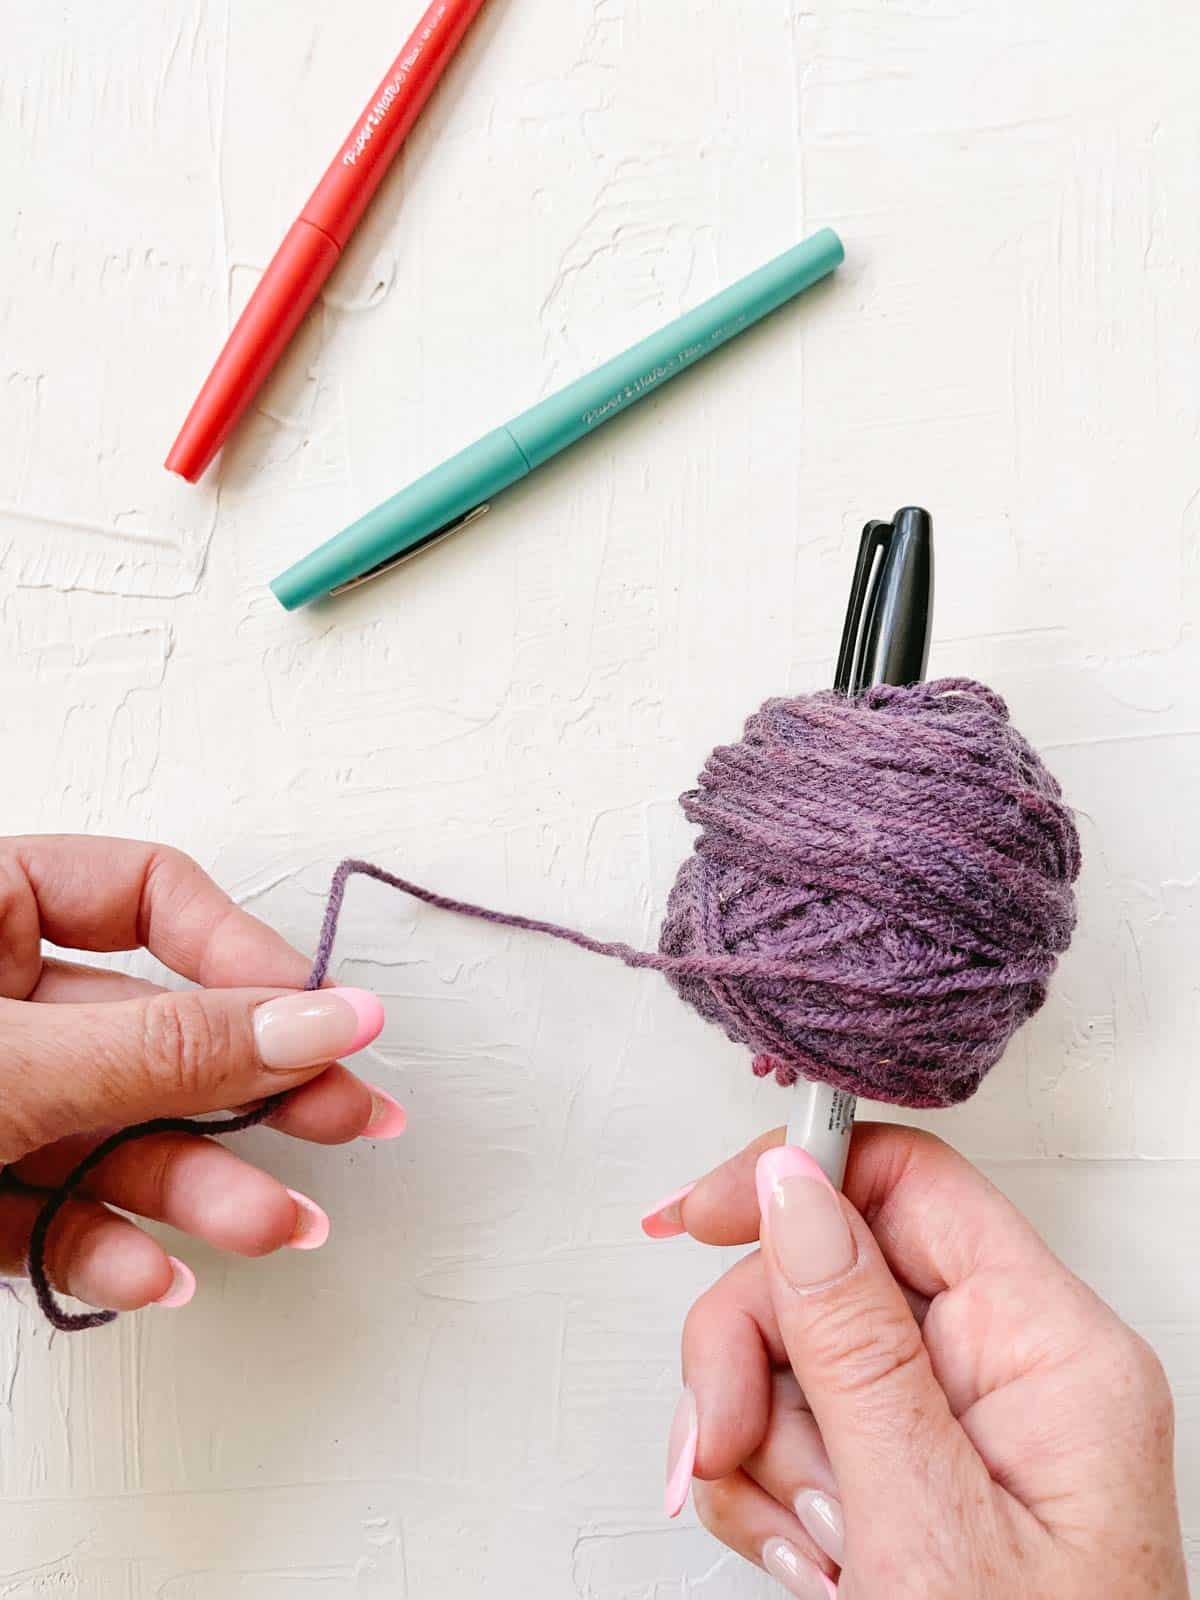 Winding scraps of yarn on a sharpie pen to create a yarn ball.